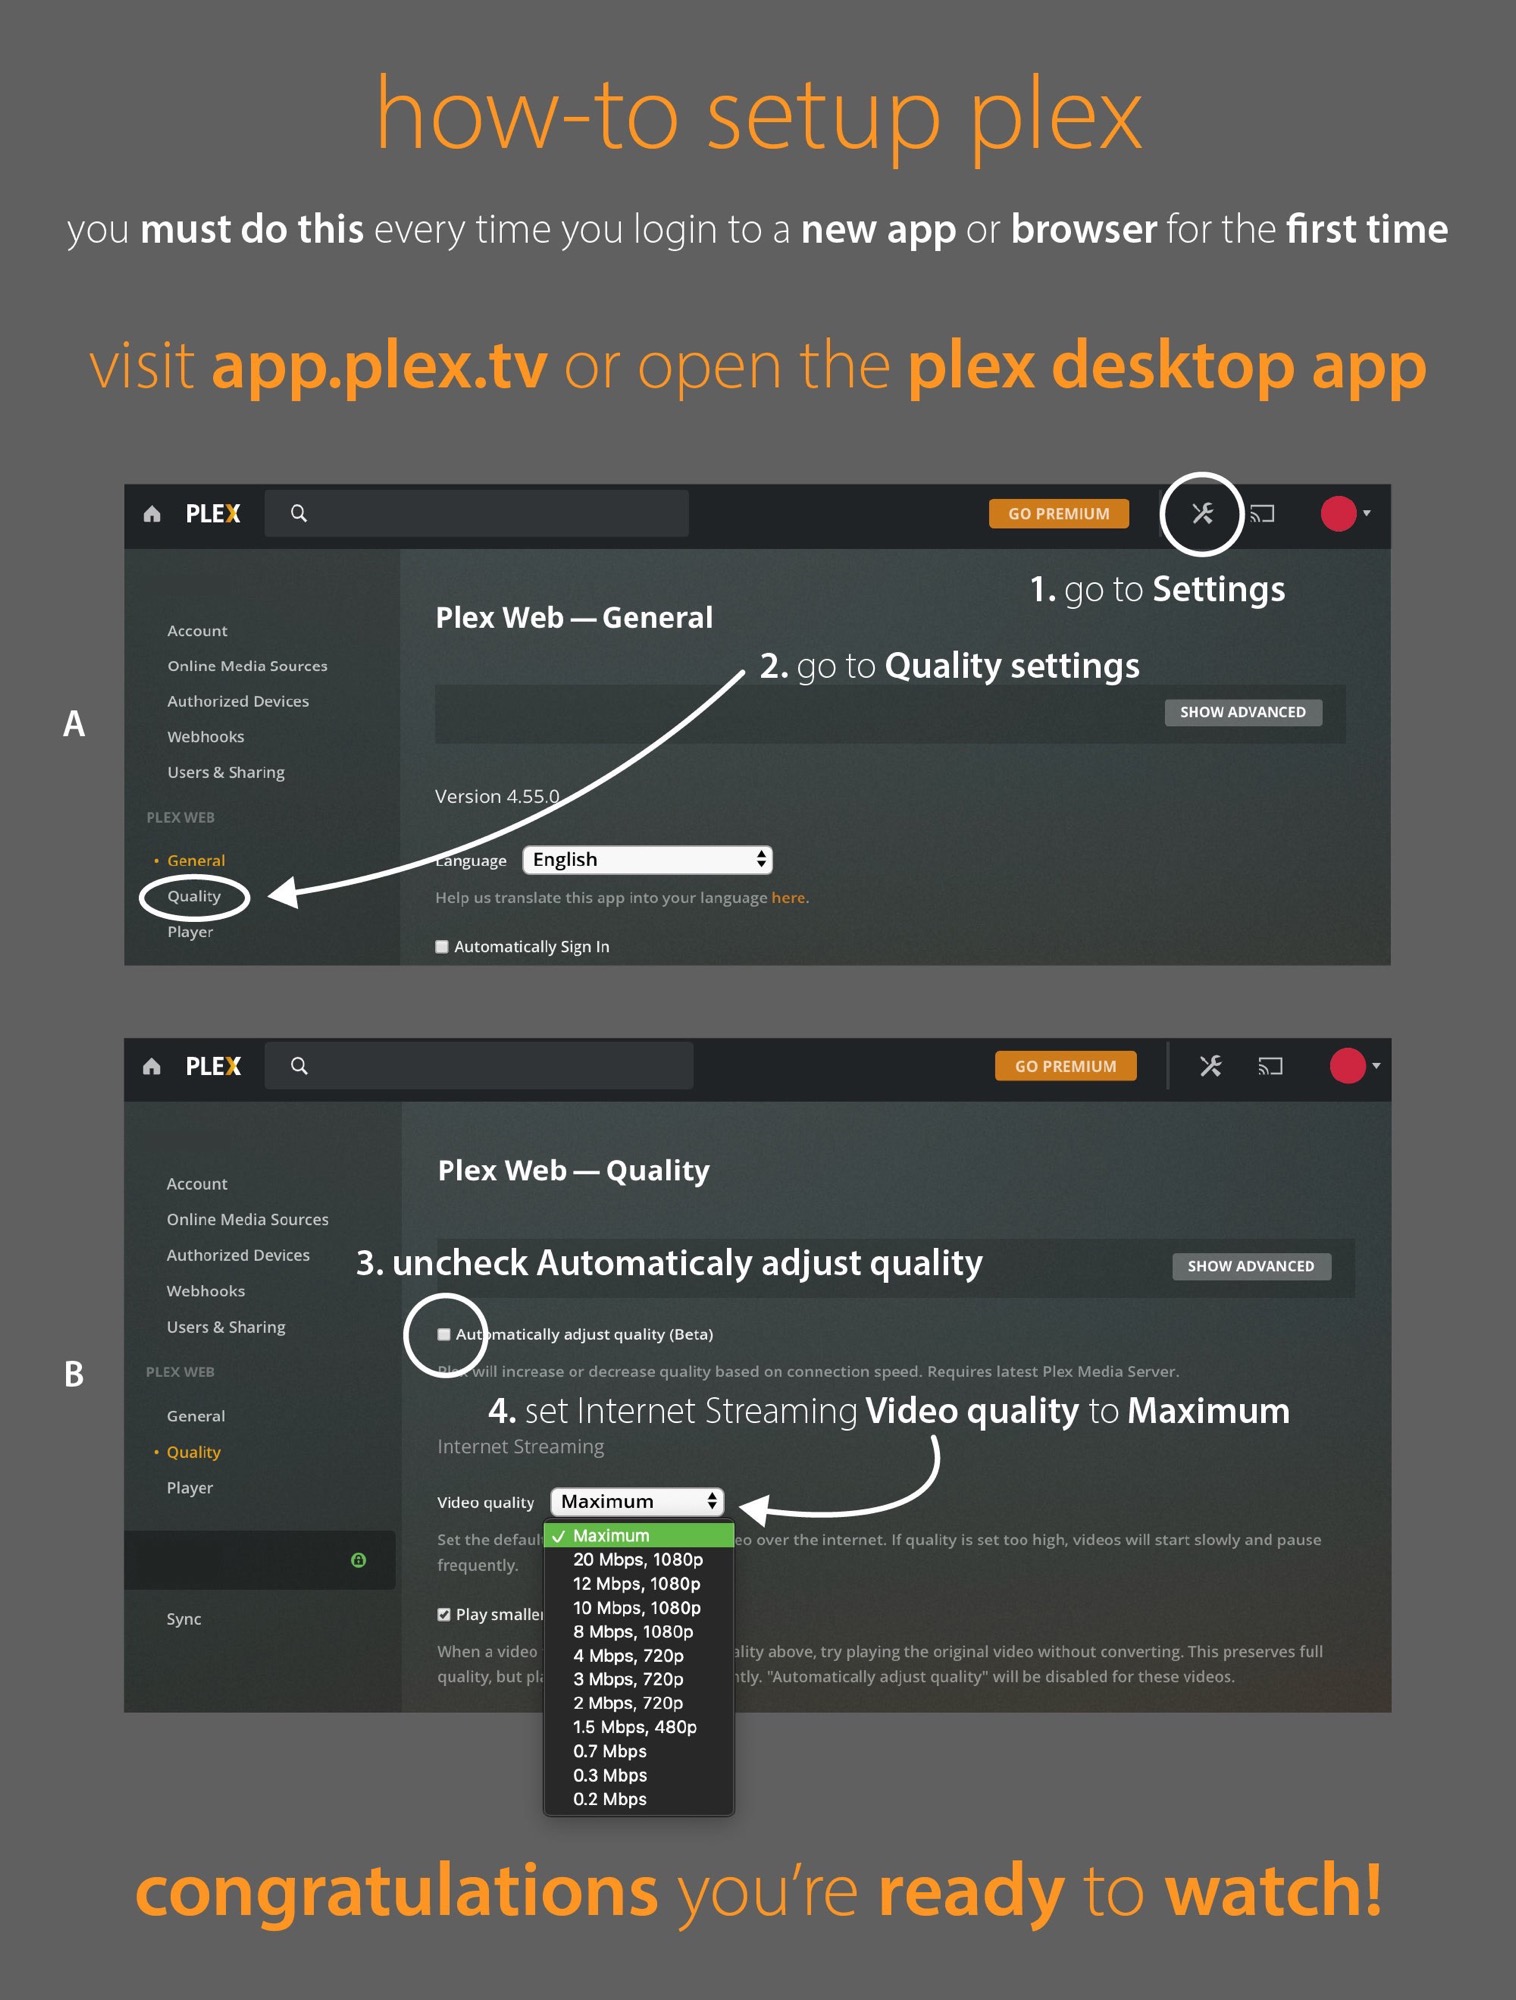 Plex for Web or Plex Media Player for Windows/macOS